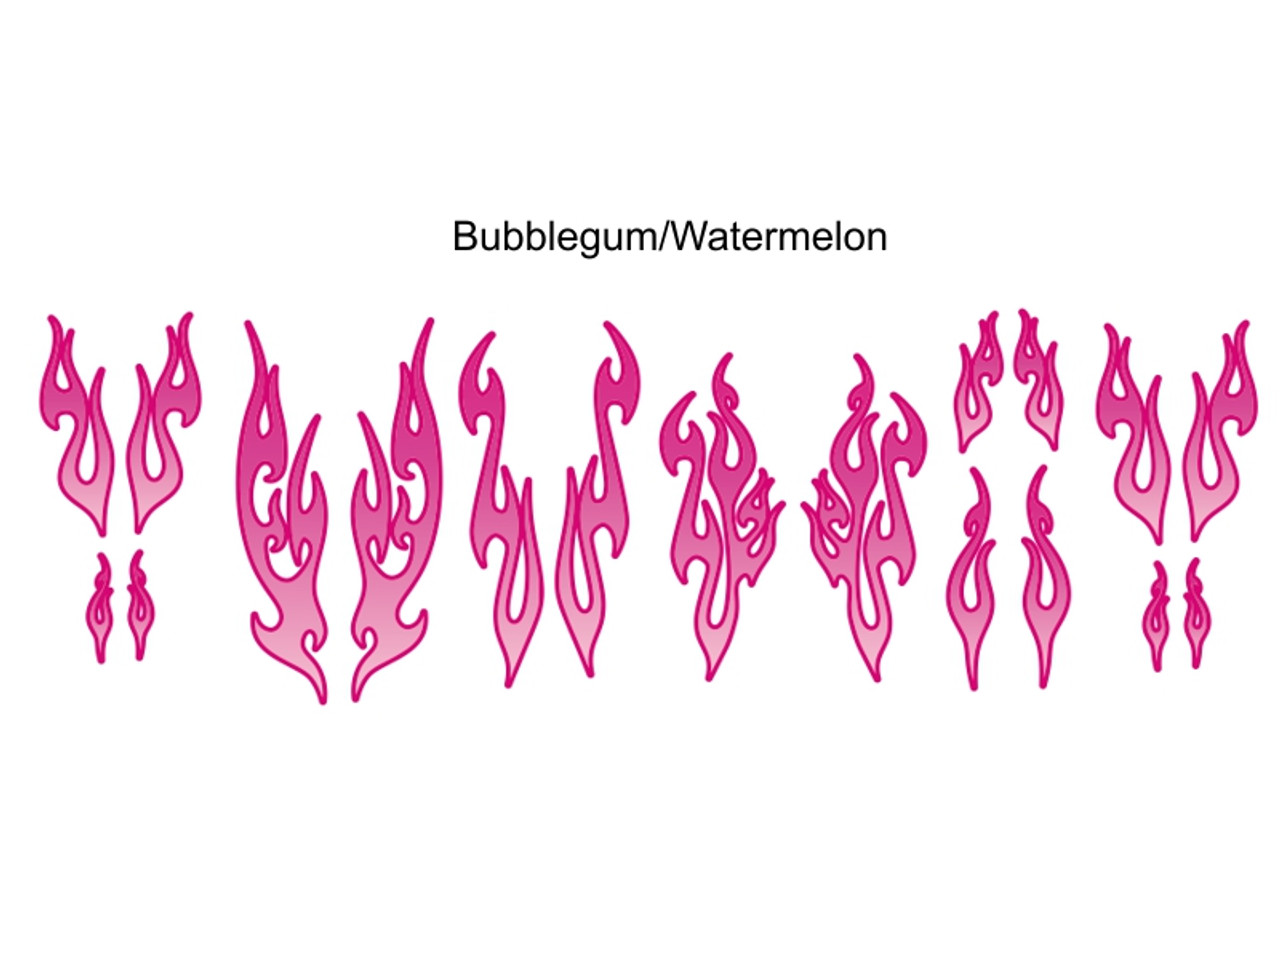 Bubblegum flames with a Watermelon pinstripe